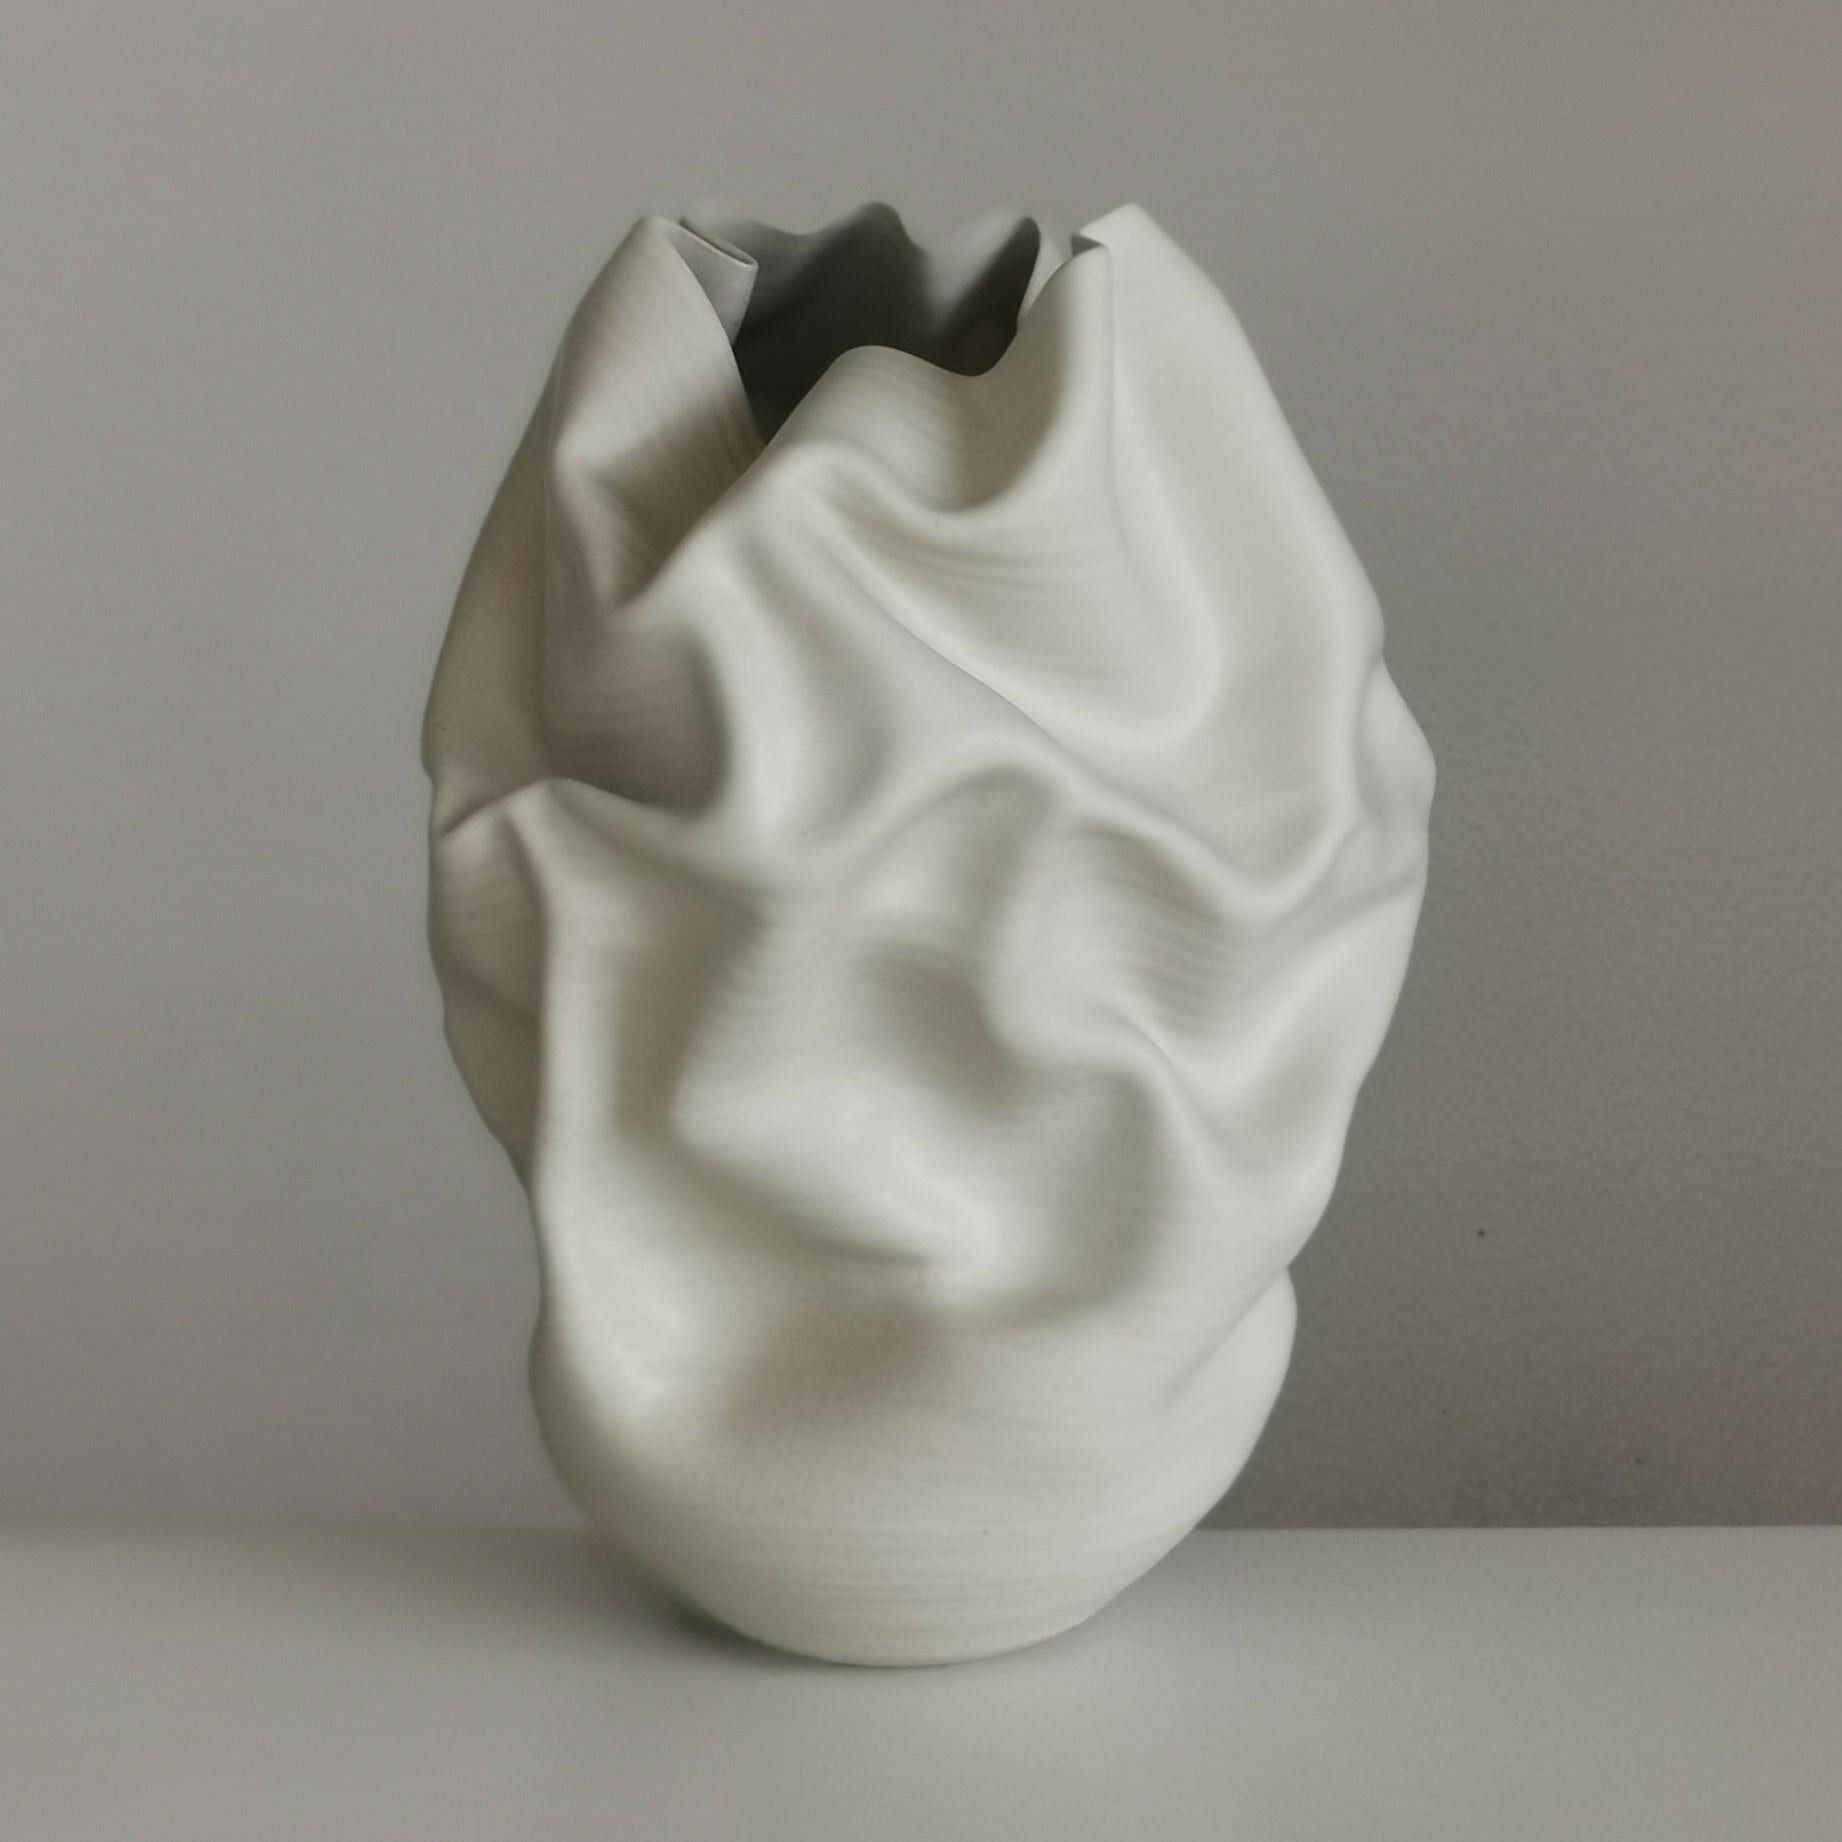 Hand-Crafted Undulating Crumpled Form No 51, a Ceramic Vessel by Nicholas Arroyave-Portela